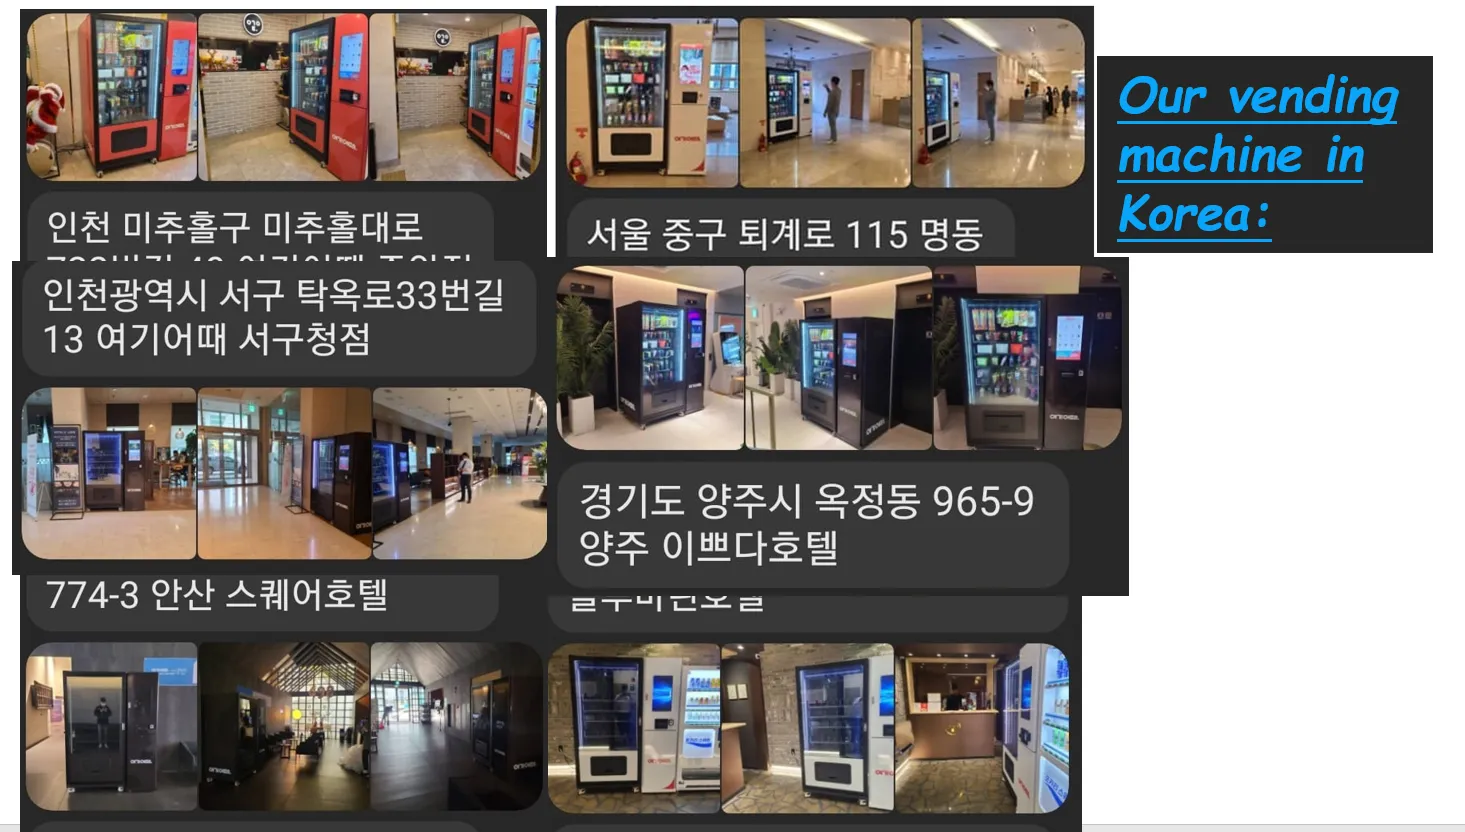 Intelligent Elevator Food Deli Vending Machine with 21.5-inch touchscreen & card reader in Korea